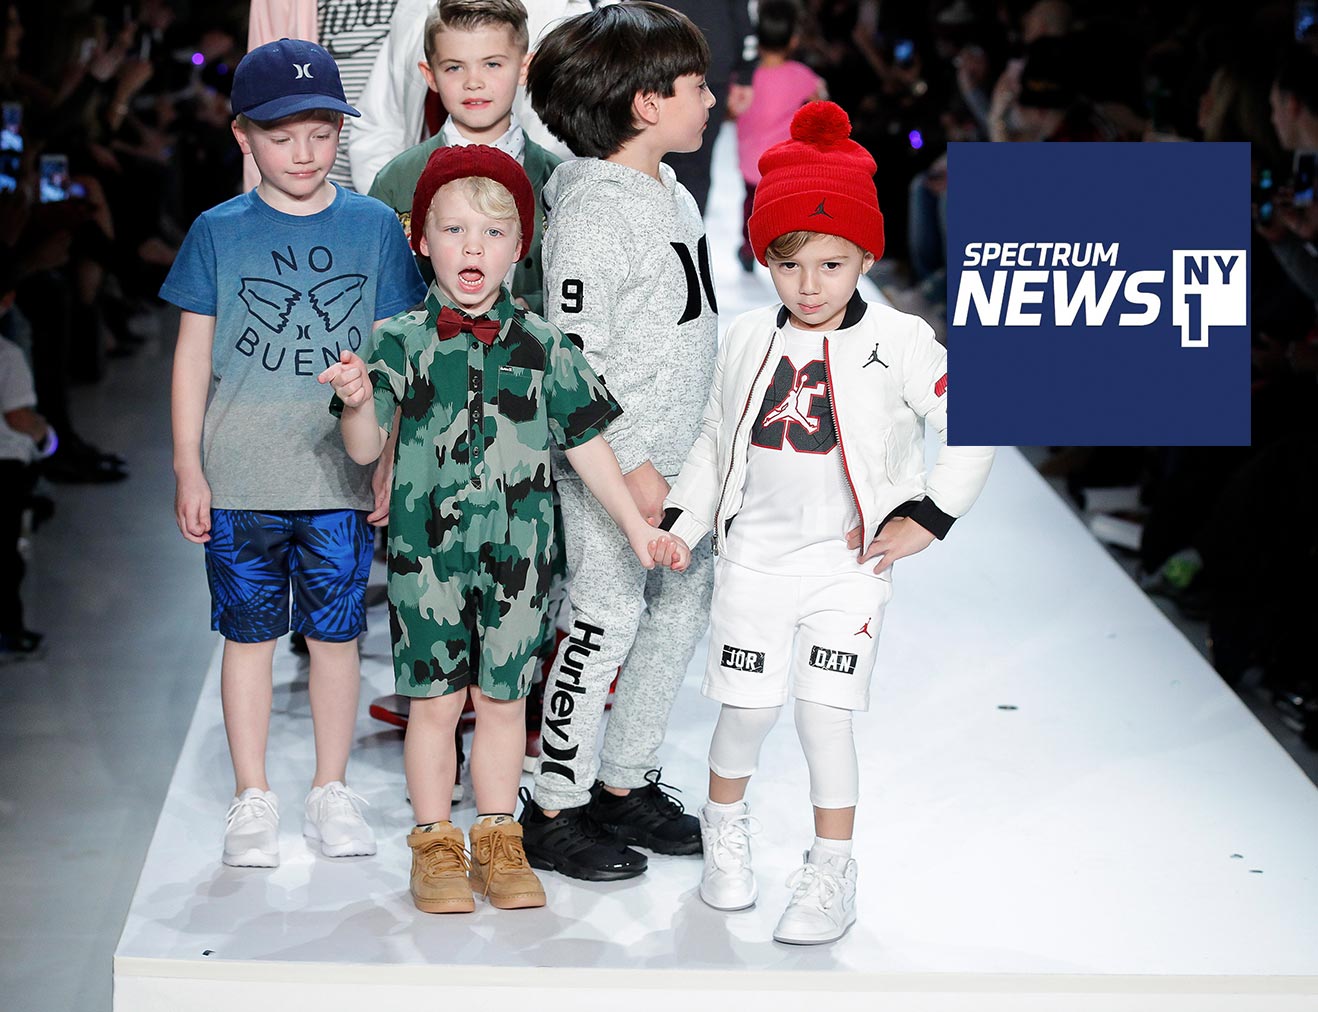 Rookie USA Fashion Show Puts Celebrity's Kids on the Runway